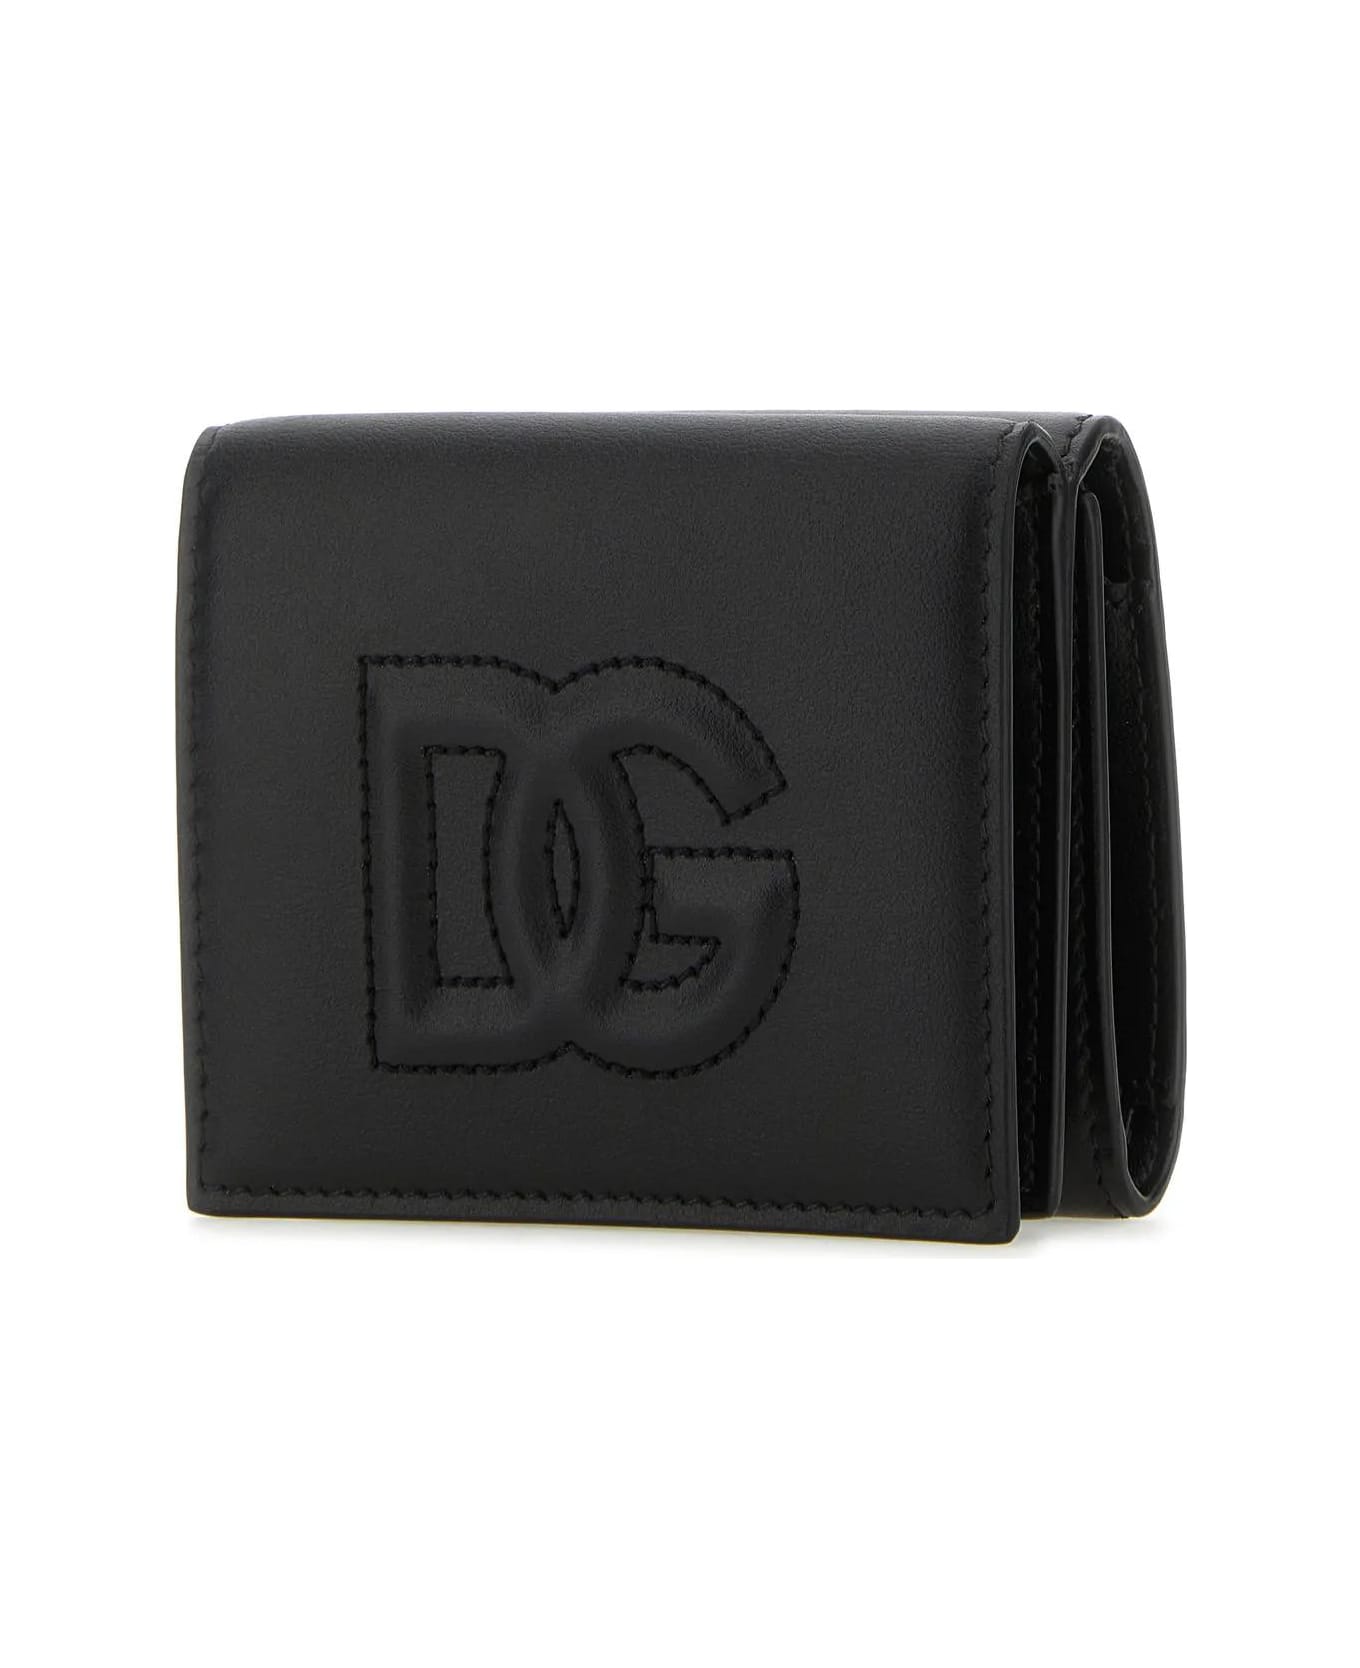 Dolce & Gabbana Black Leather Wallet - Black